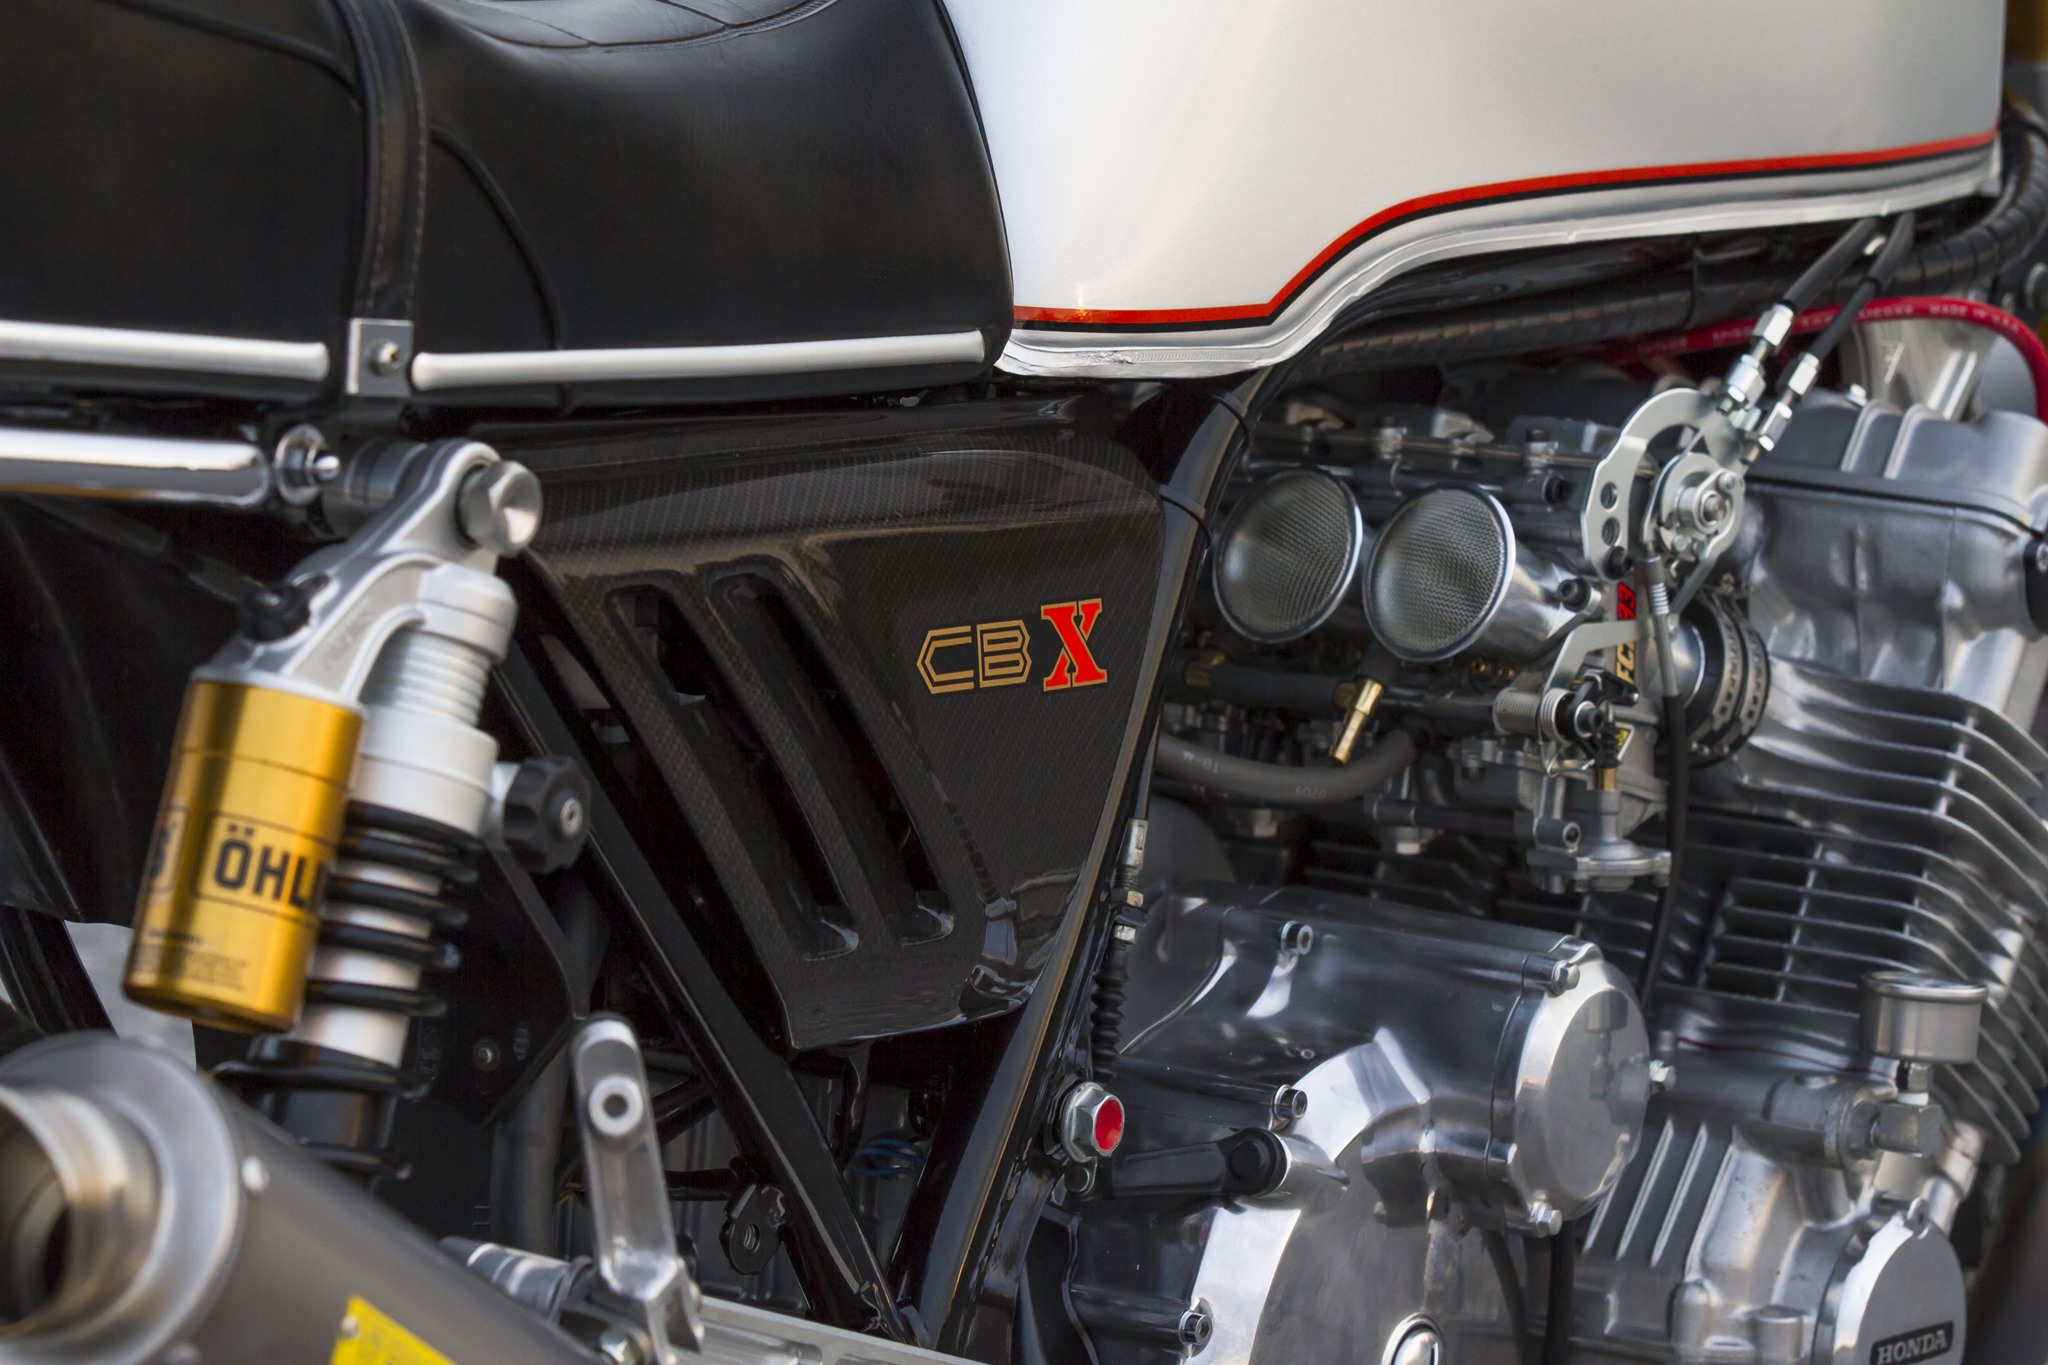 Restomod Monster: Honda CBX by dB Customs